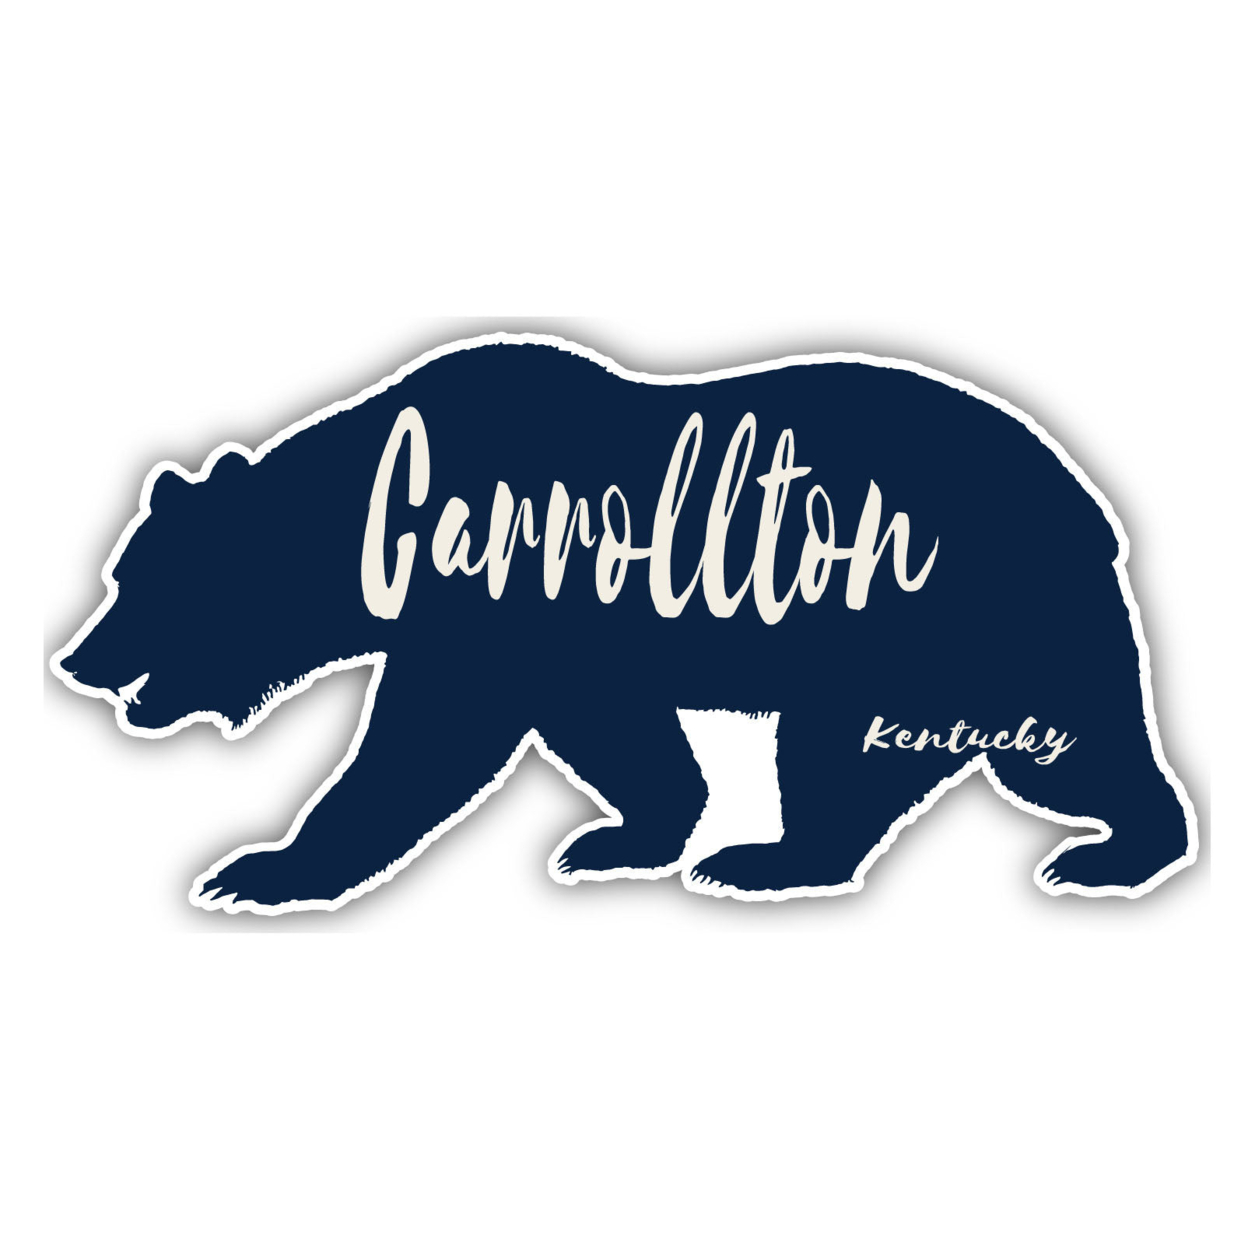 Carrollton Kentucky Souvenir Decorative Stickers (Choose Theme And Size) - 4-Pack, 12-Inch, Bear